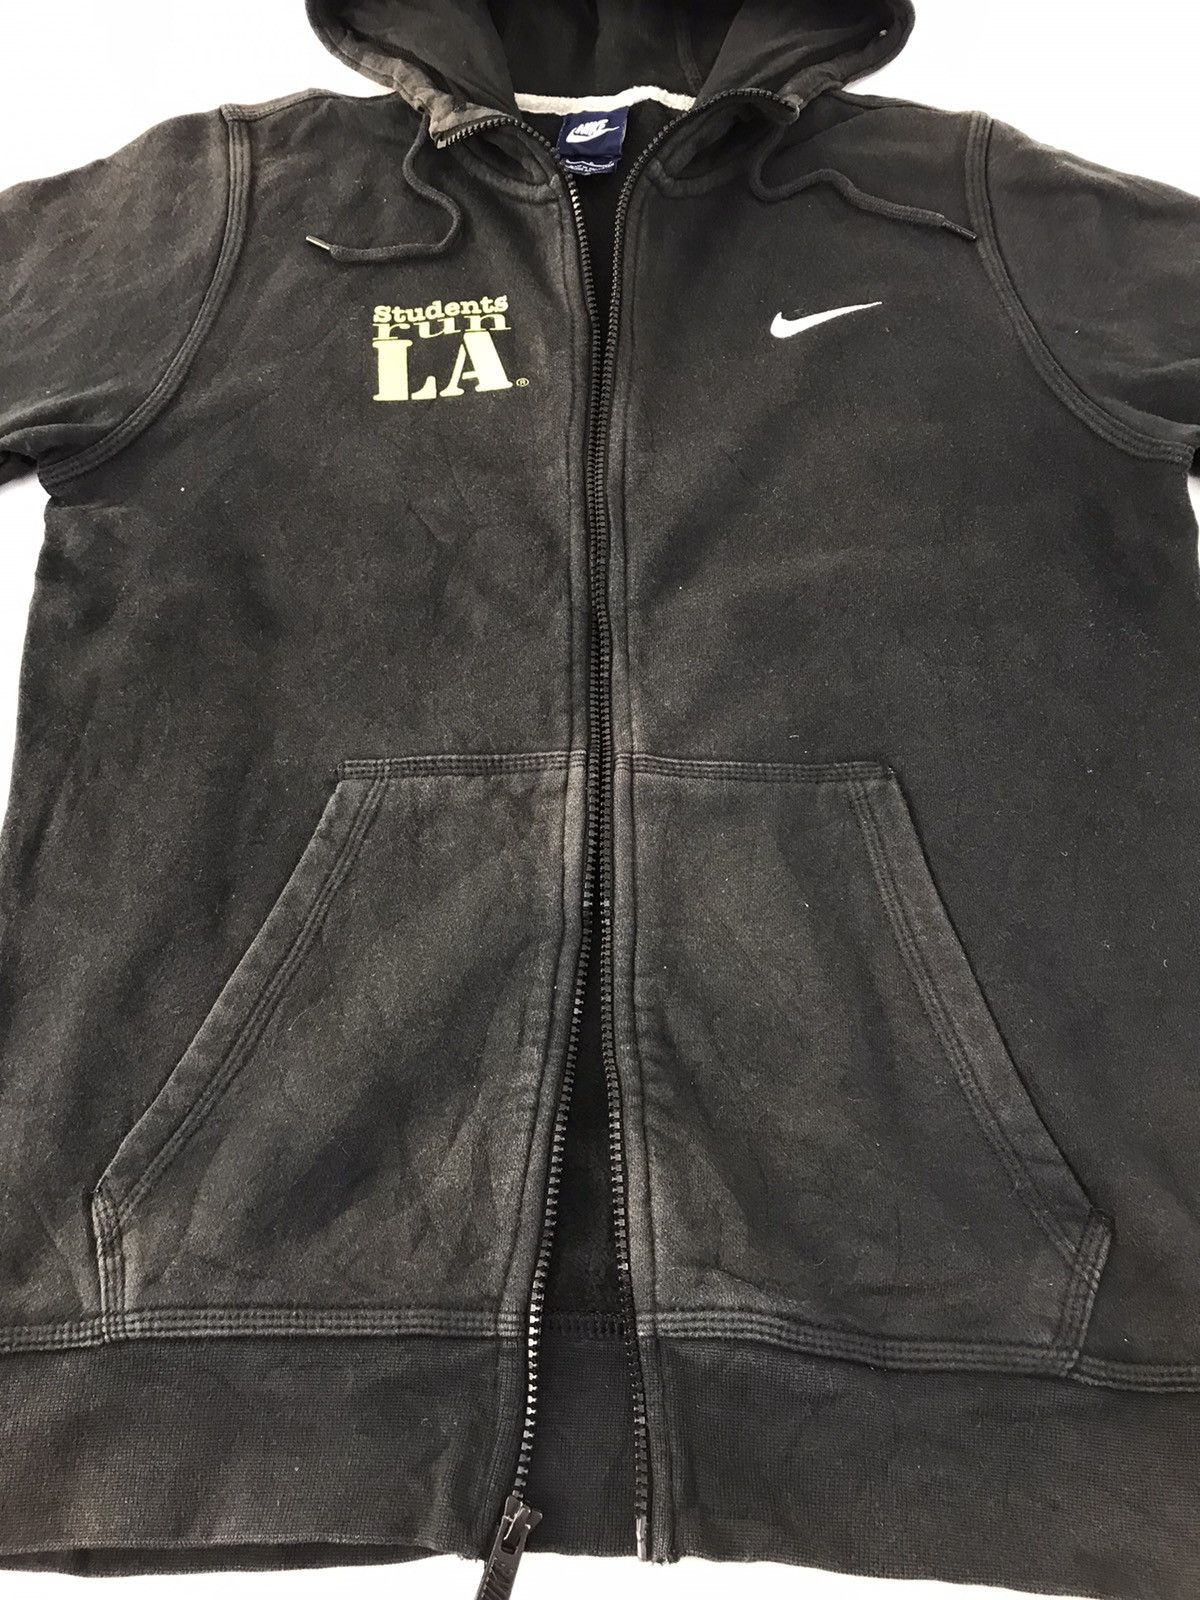 Nike Nike Marathon Finisher Student Run LA Hoodies Jacket Zip Up Size US M / EU 48-50 / 2 - 5 Thumbnail